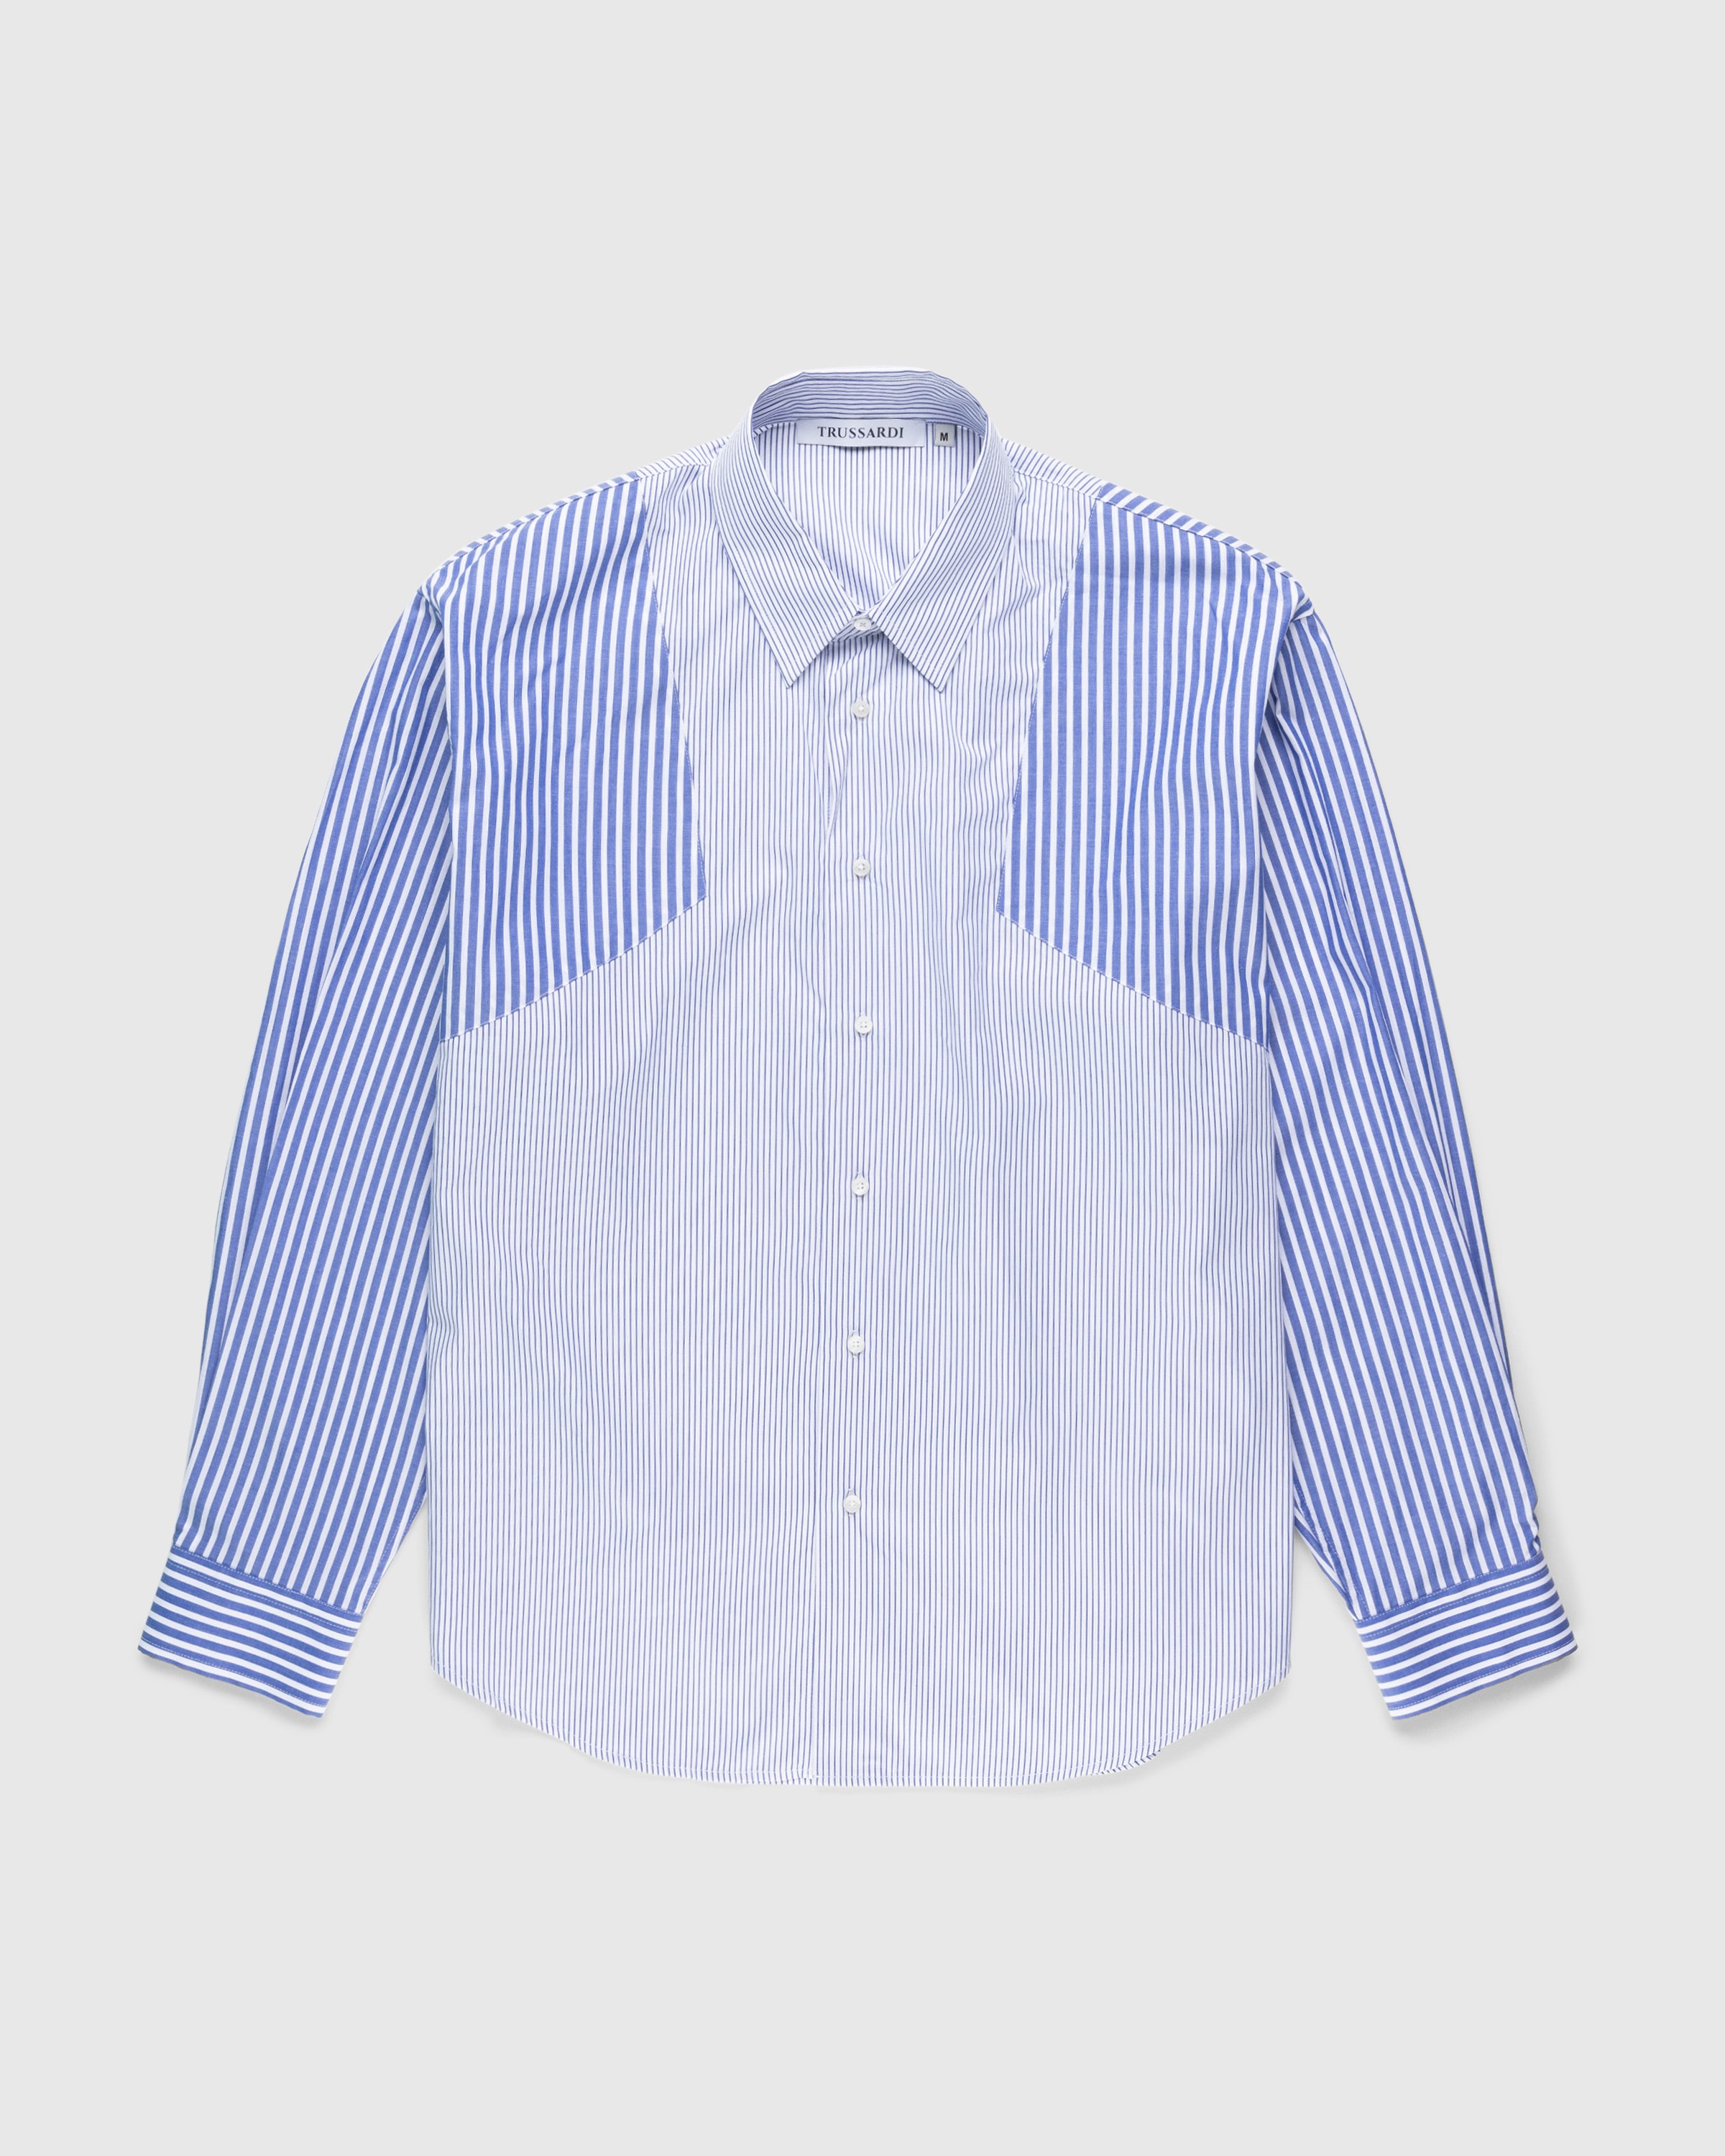 Trussardi - Shirt Cotton Mix Stripes - Clothing - Blue - Image 1